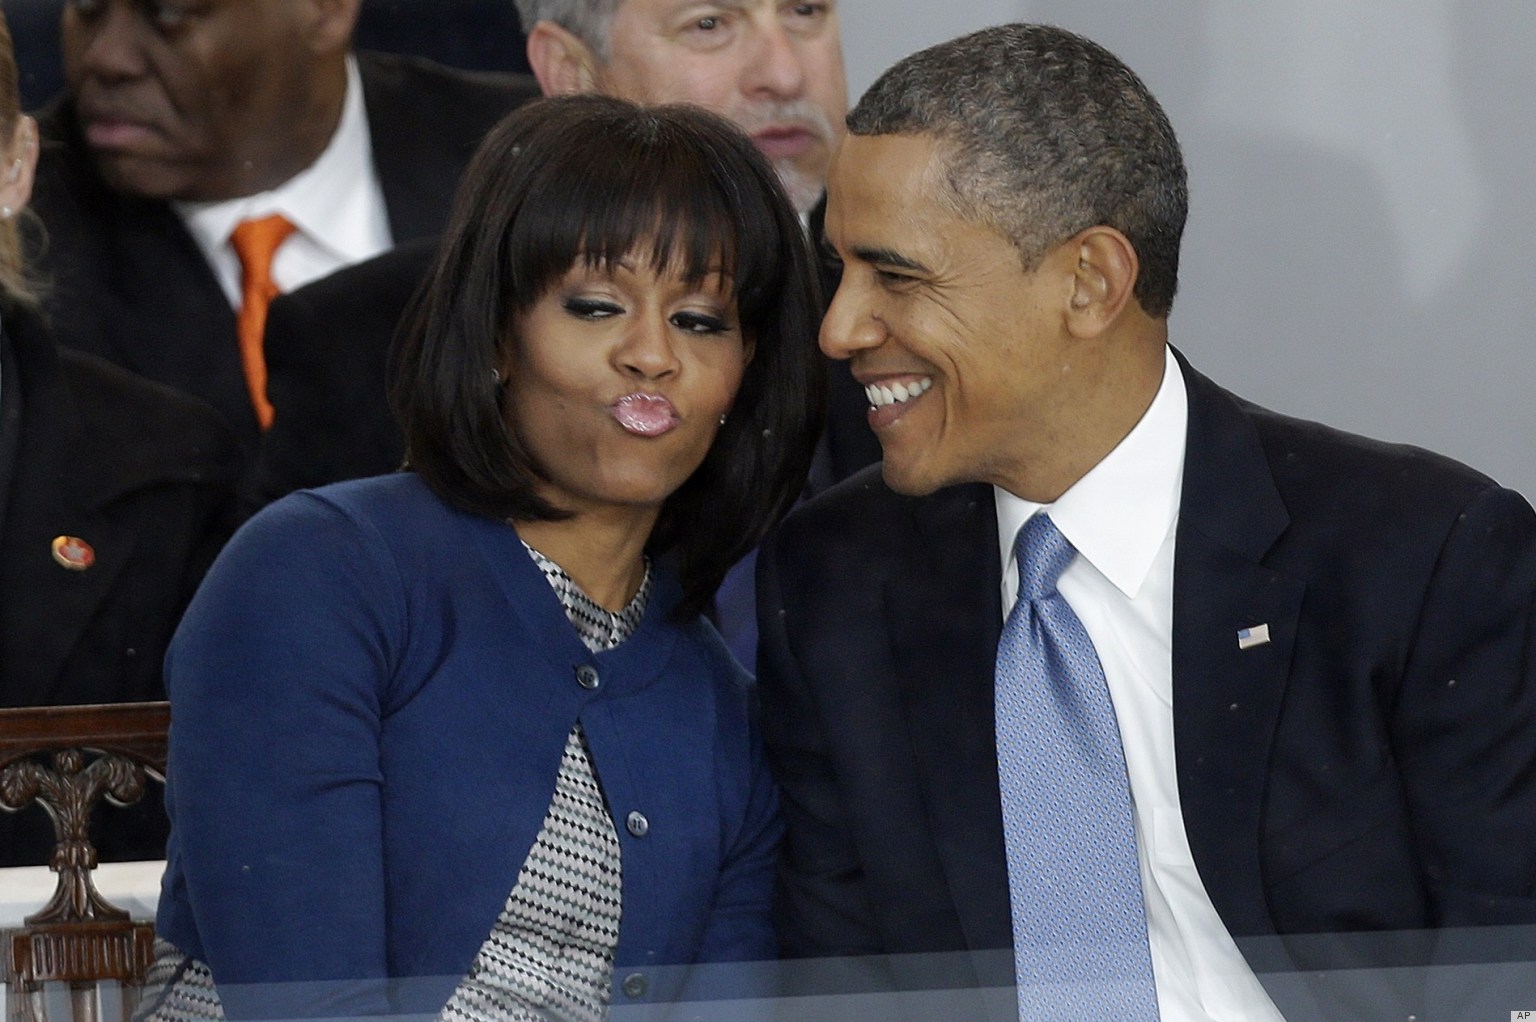 Obamas' Inauguration Kiss Captured By Sasha & Malia On Cell Phones (PHOTOS) | HuffPost1536 x 1022